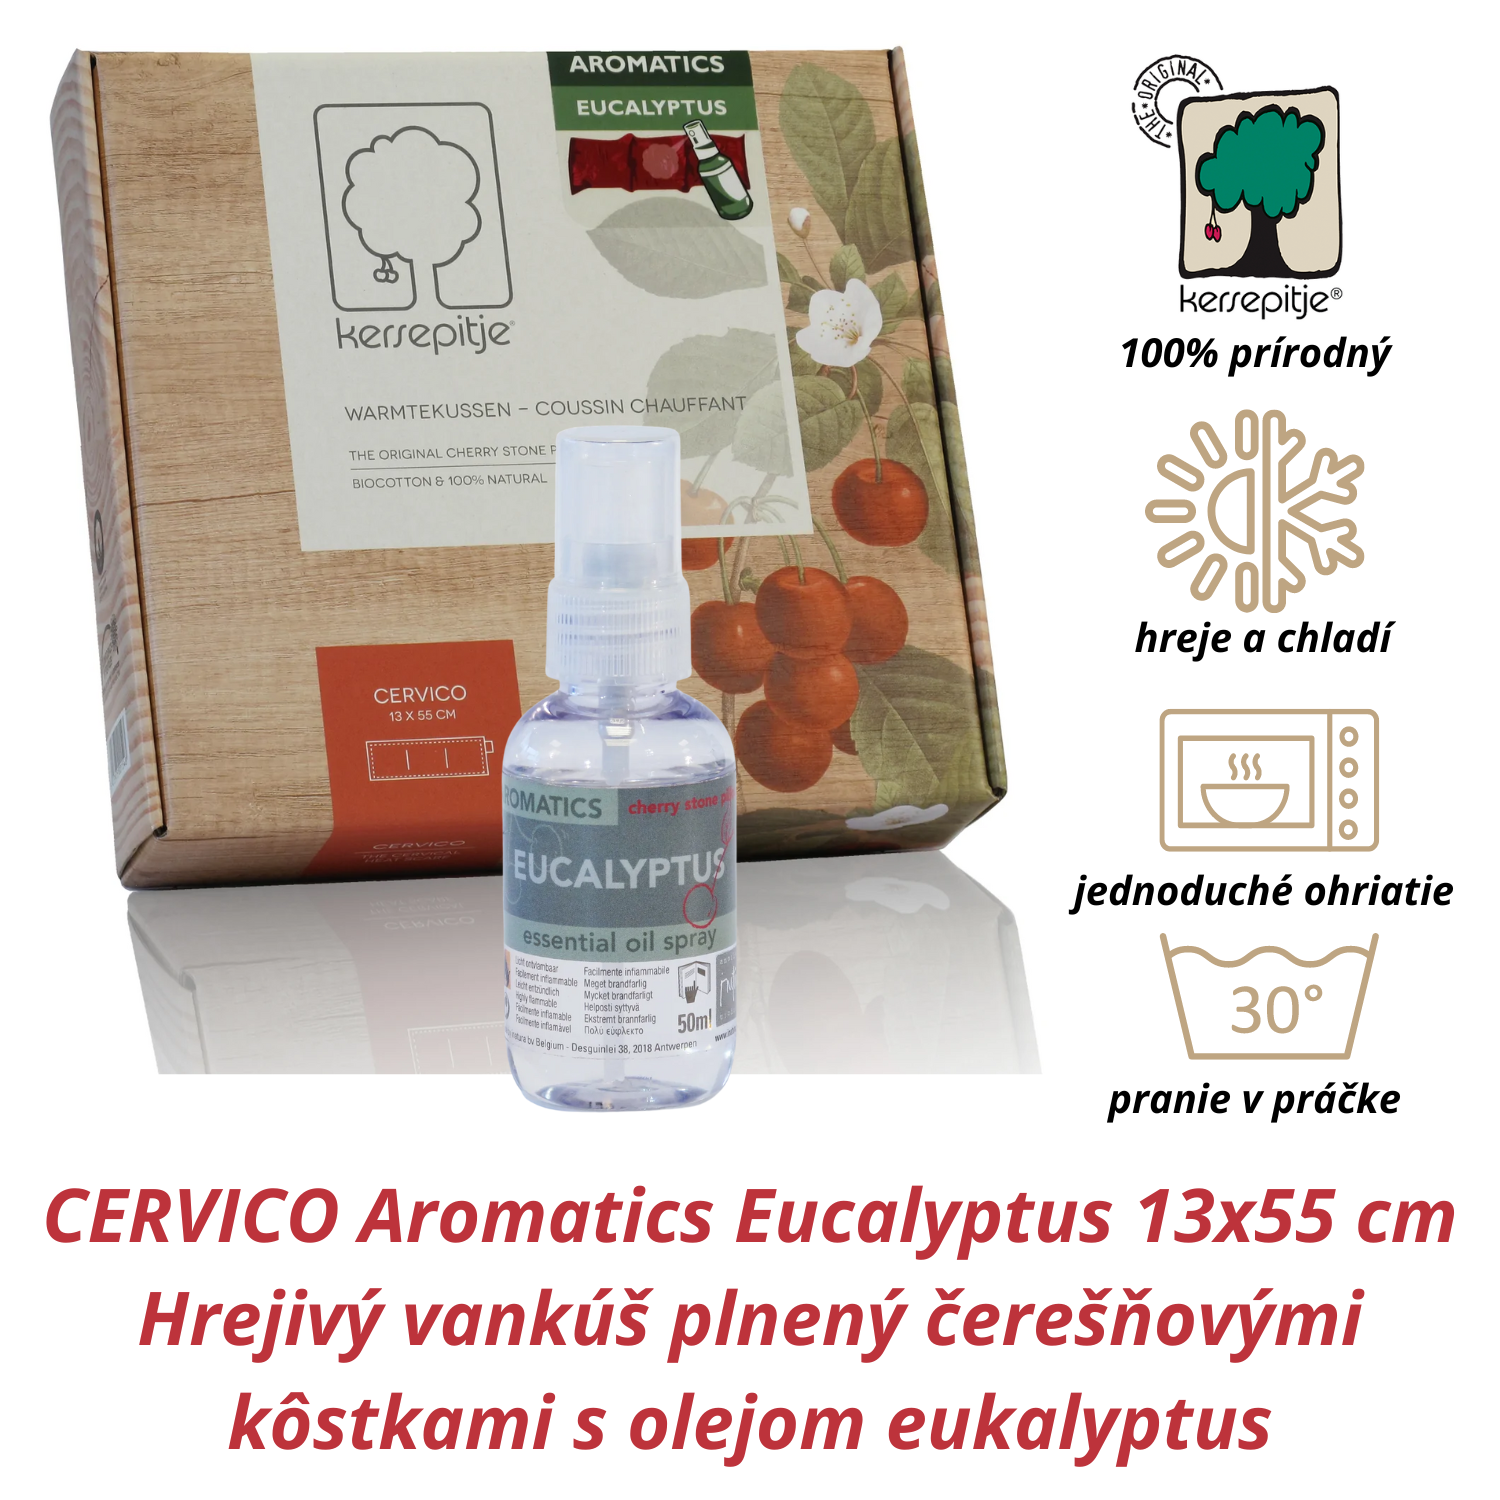 INATURA Čerešničky Cervico Aromatics Eucalyptus  13x55 cm